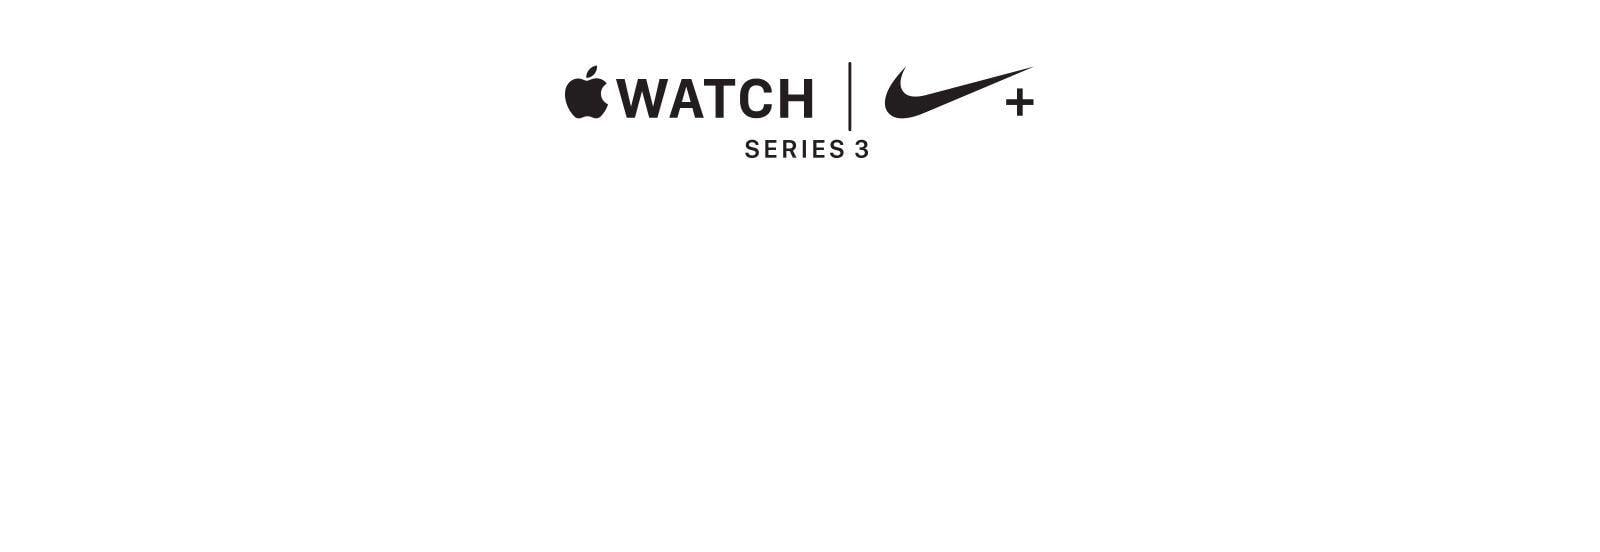 Apple Watch Logo - Nike+ Apple Watch Cellular Providers. Nike.com (LU)